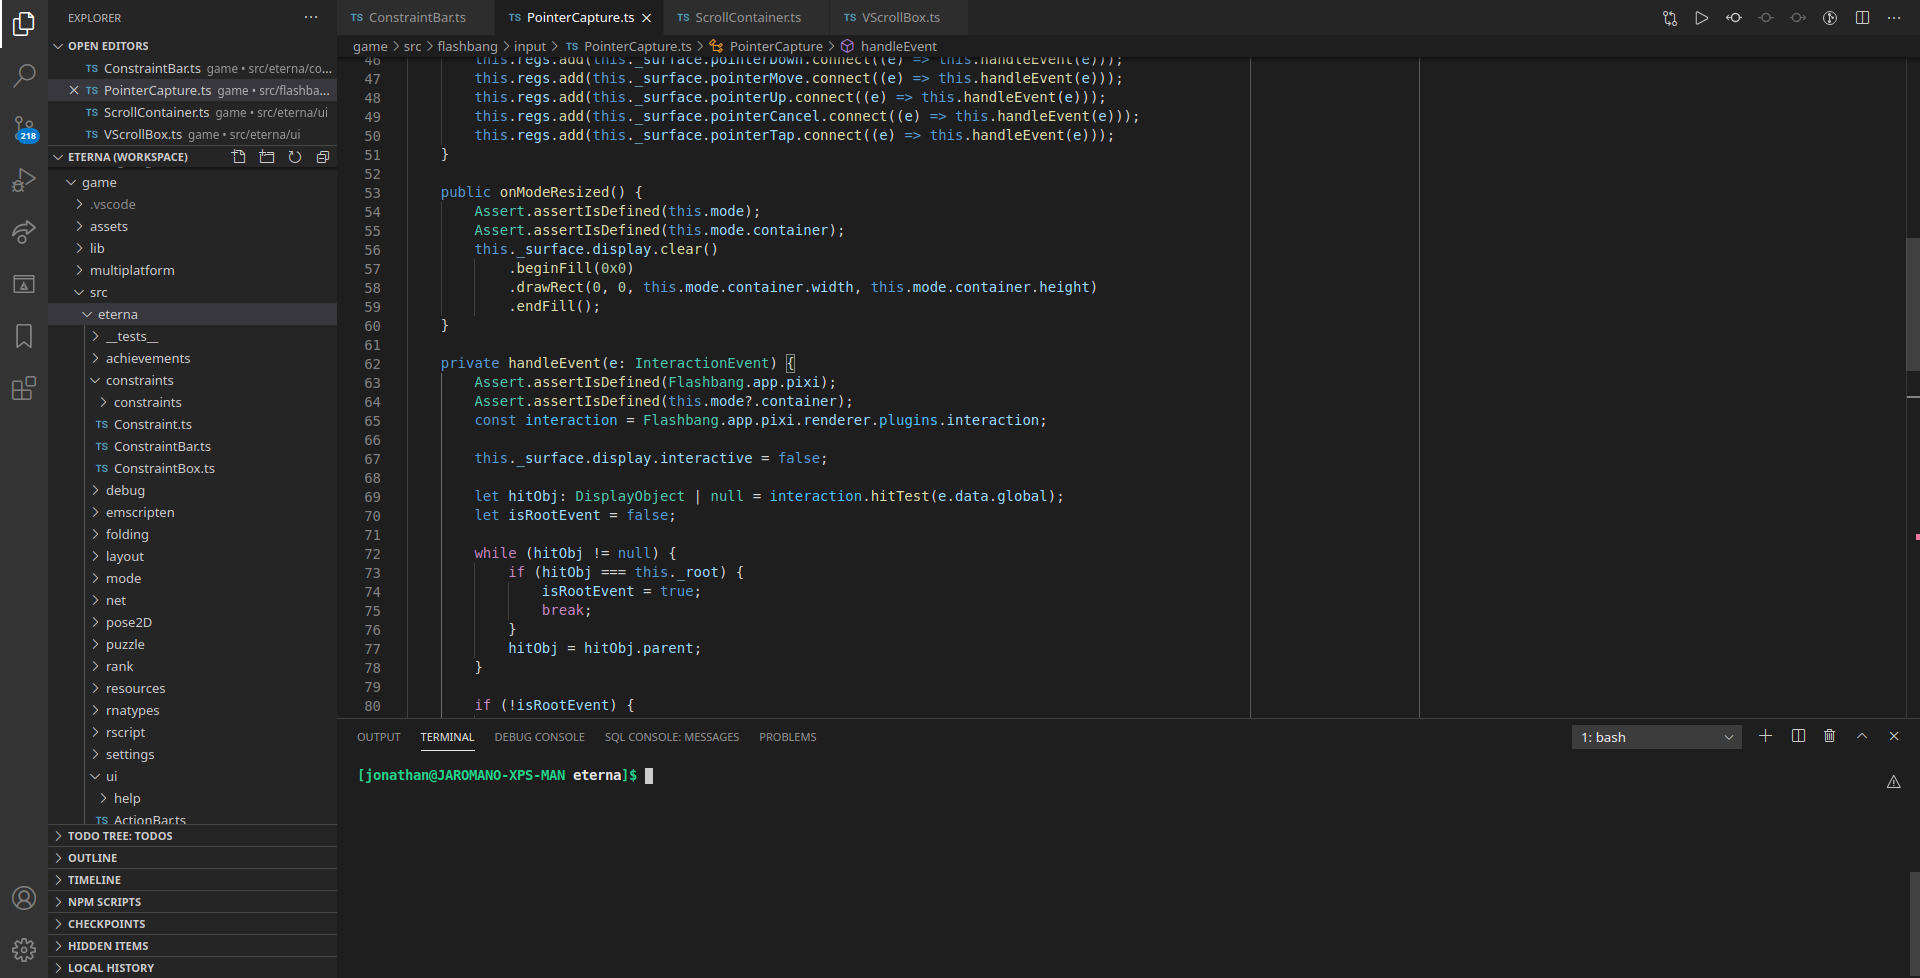 Visual Studio Code interface with input handling code